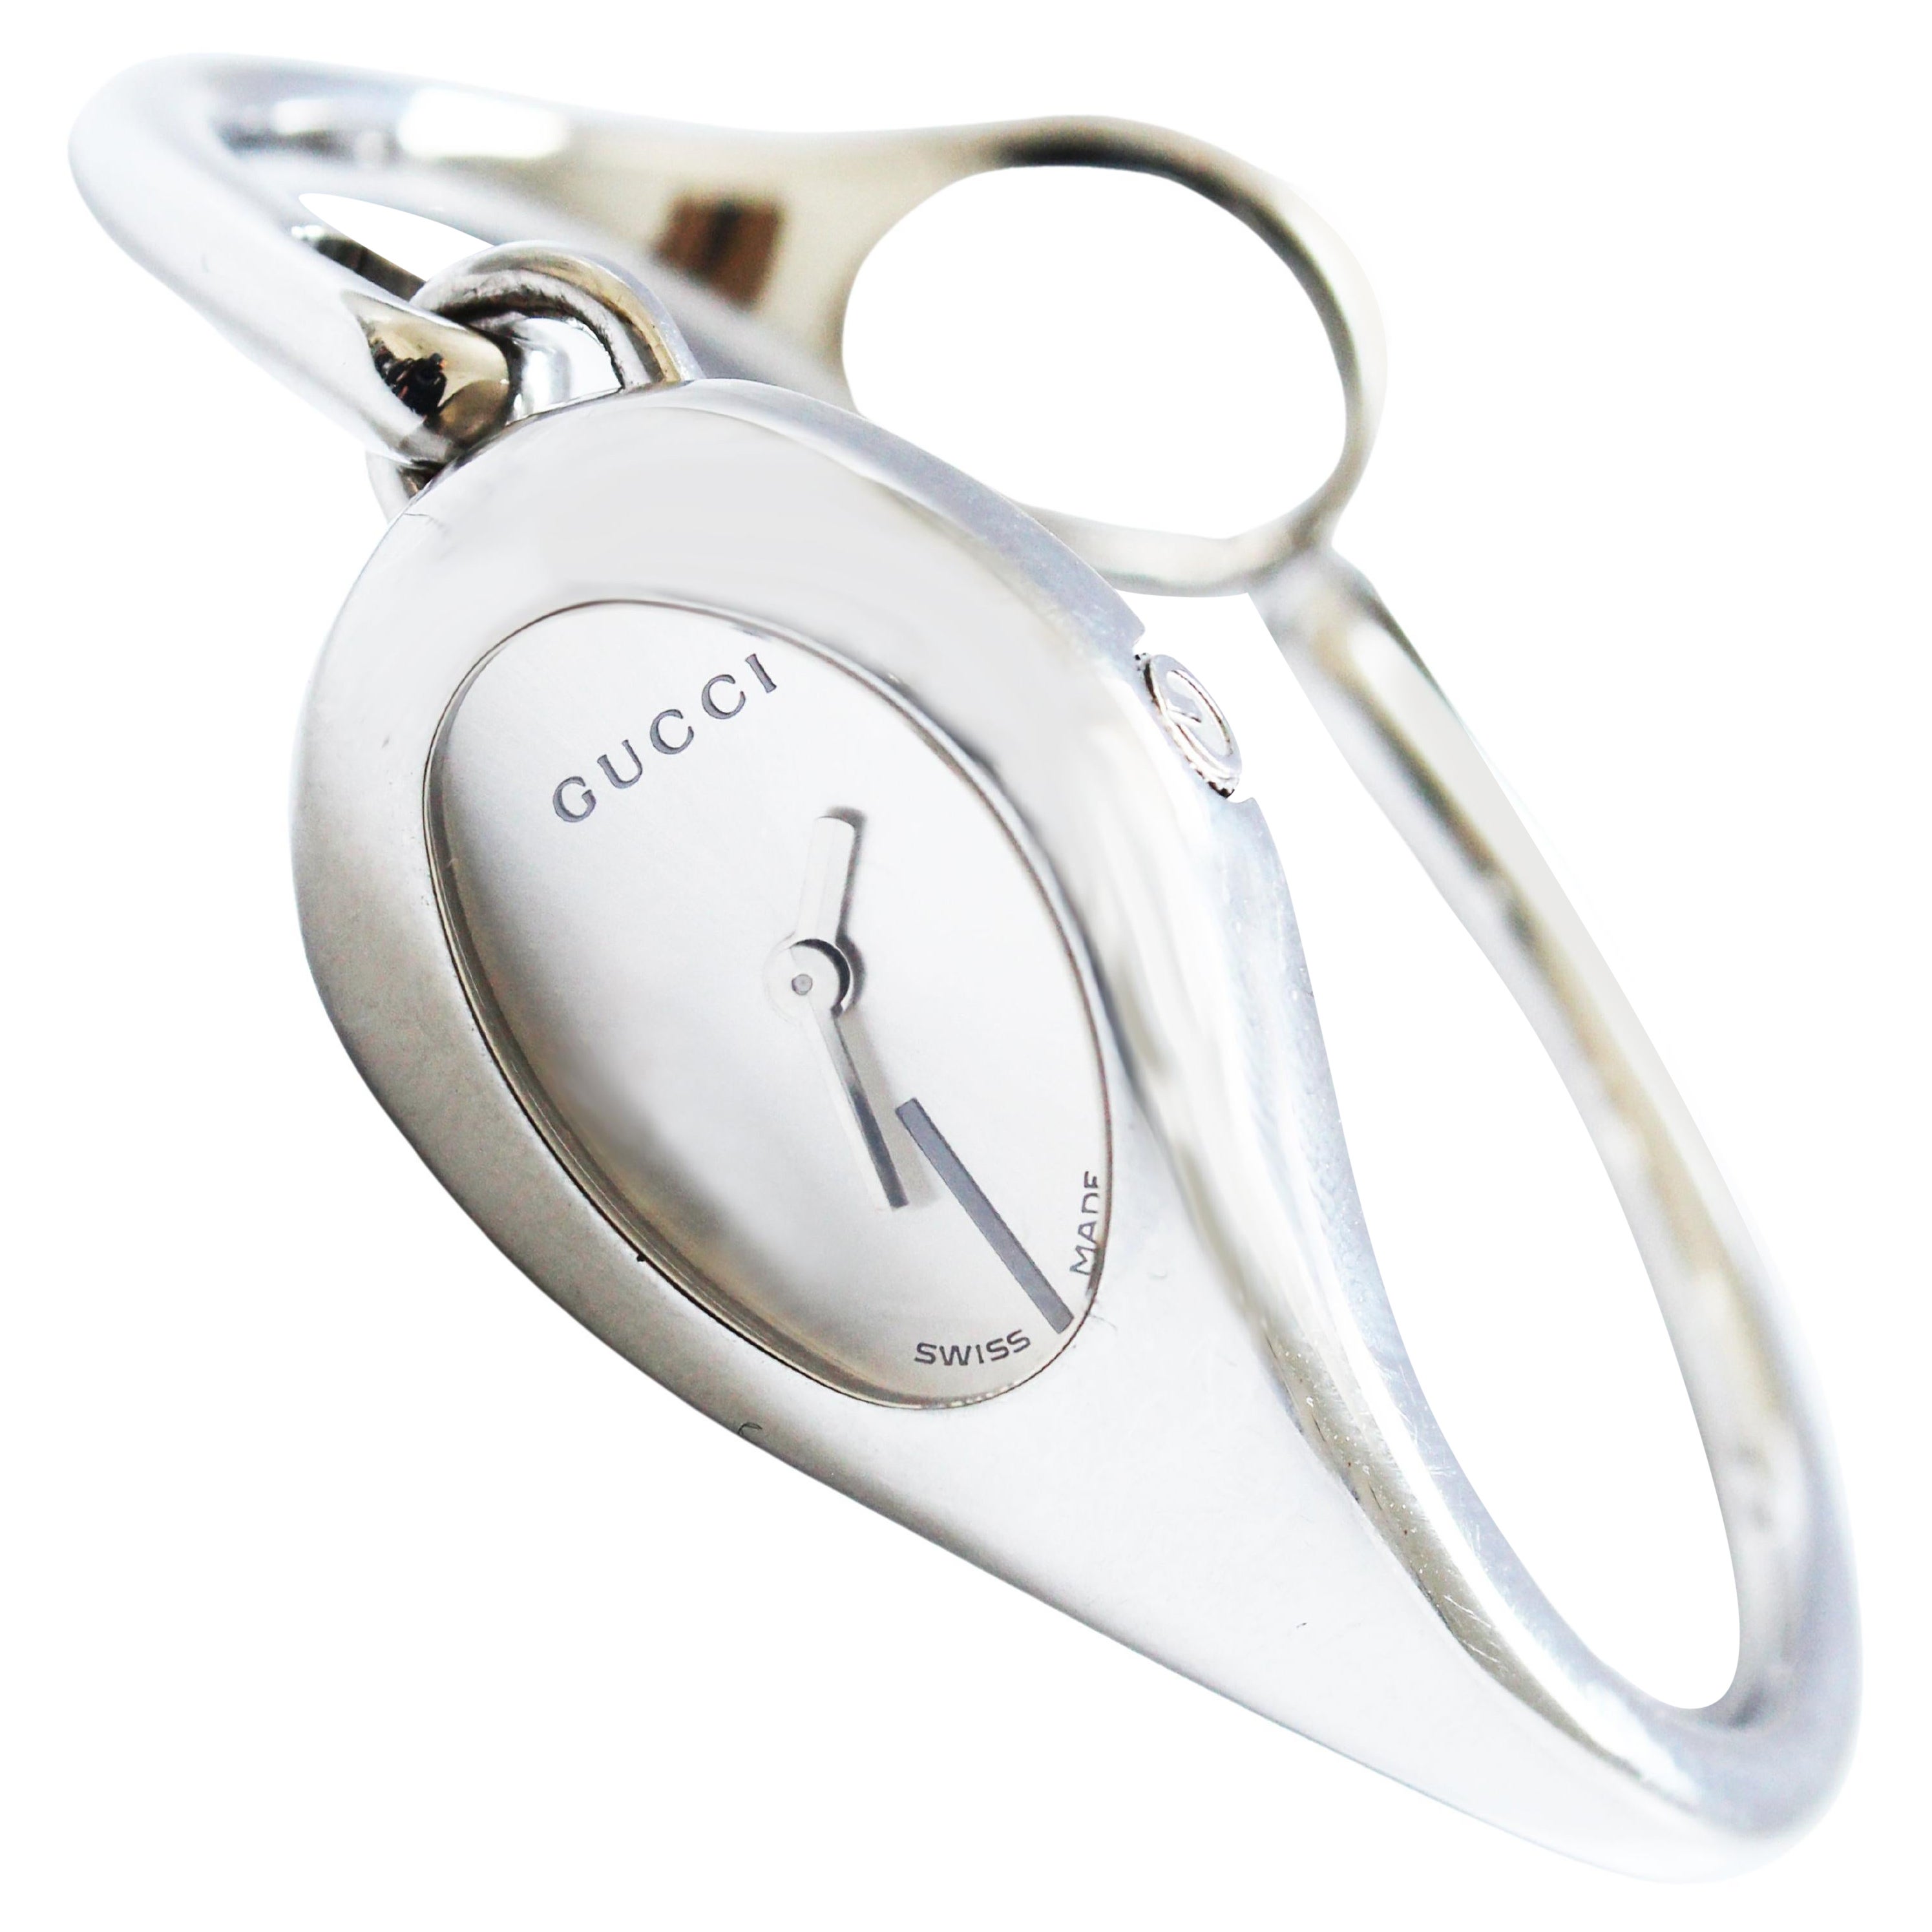 Gucci Wrist Watch #103 Horsebit Modernist Abstract Silver Metal Bracelet Style 